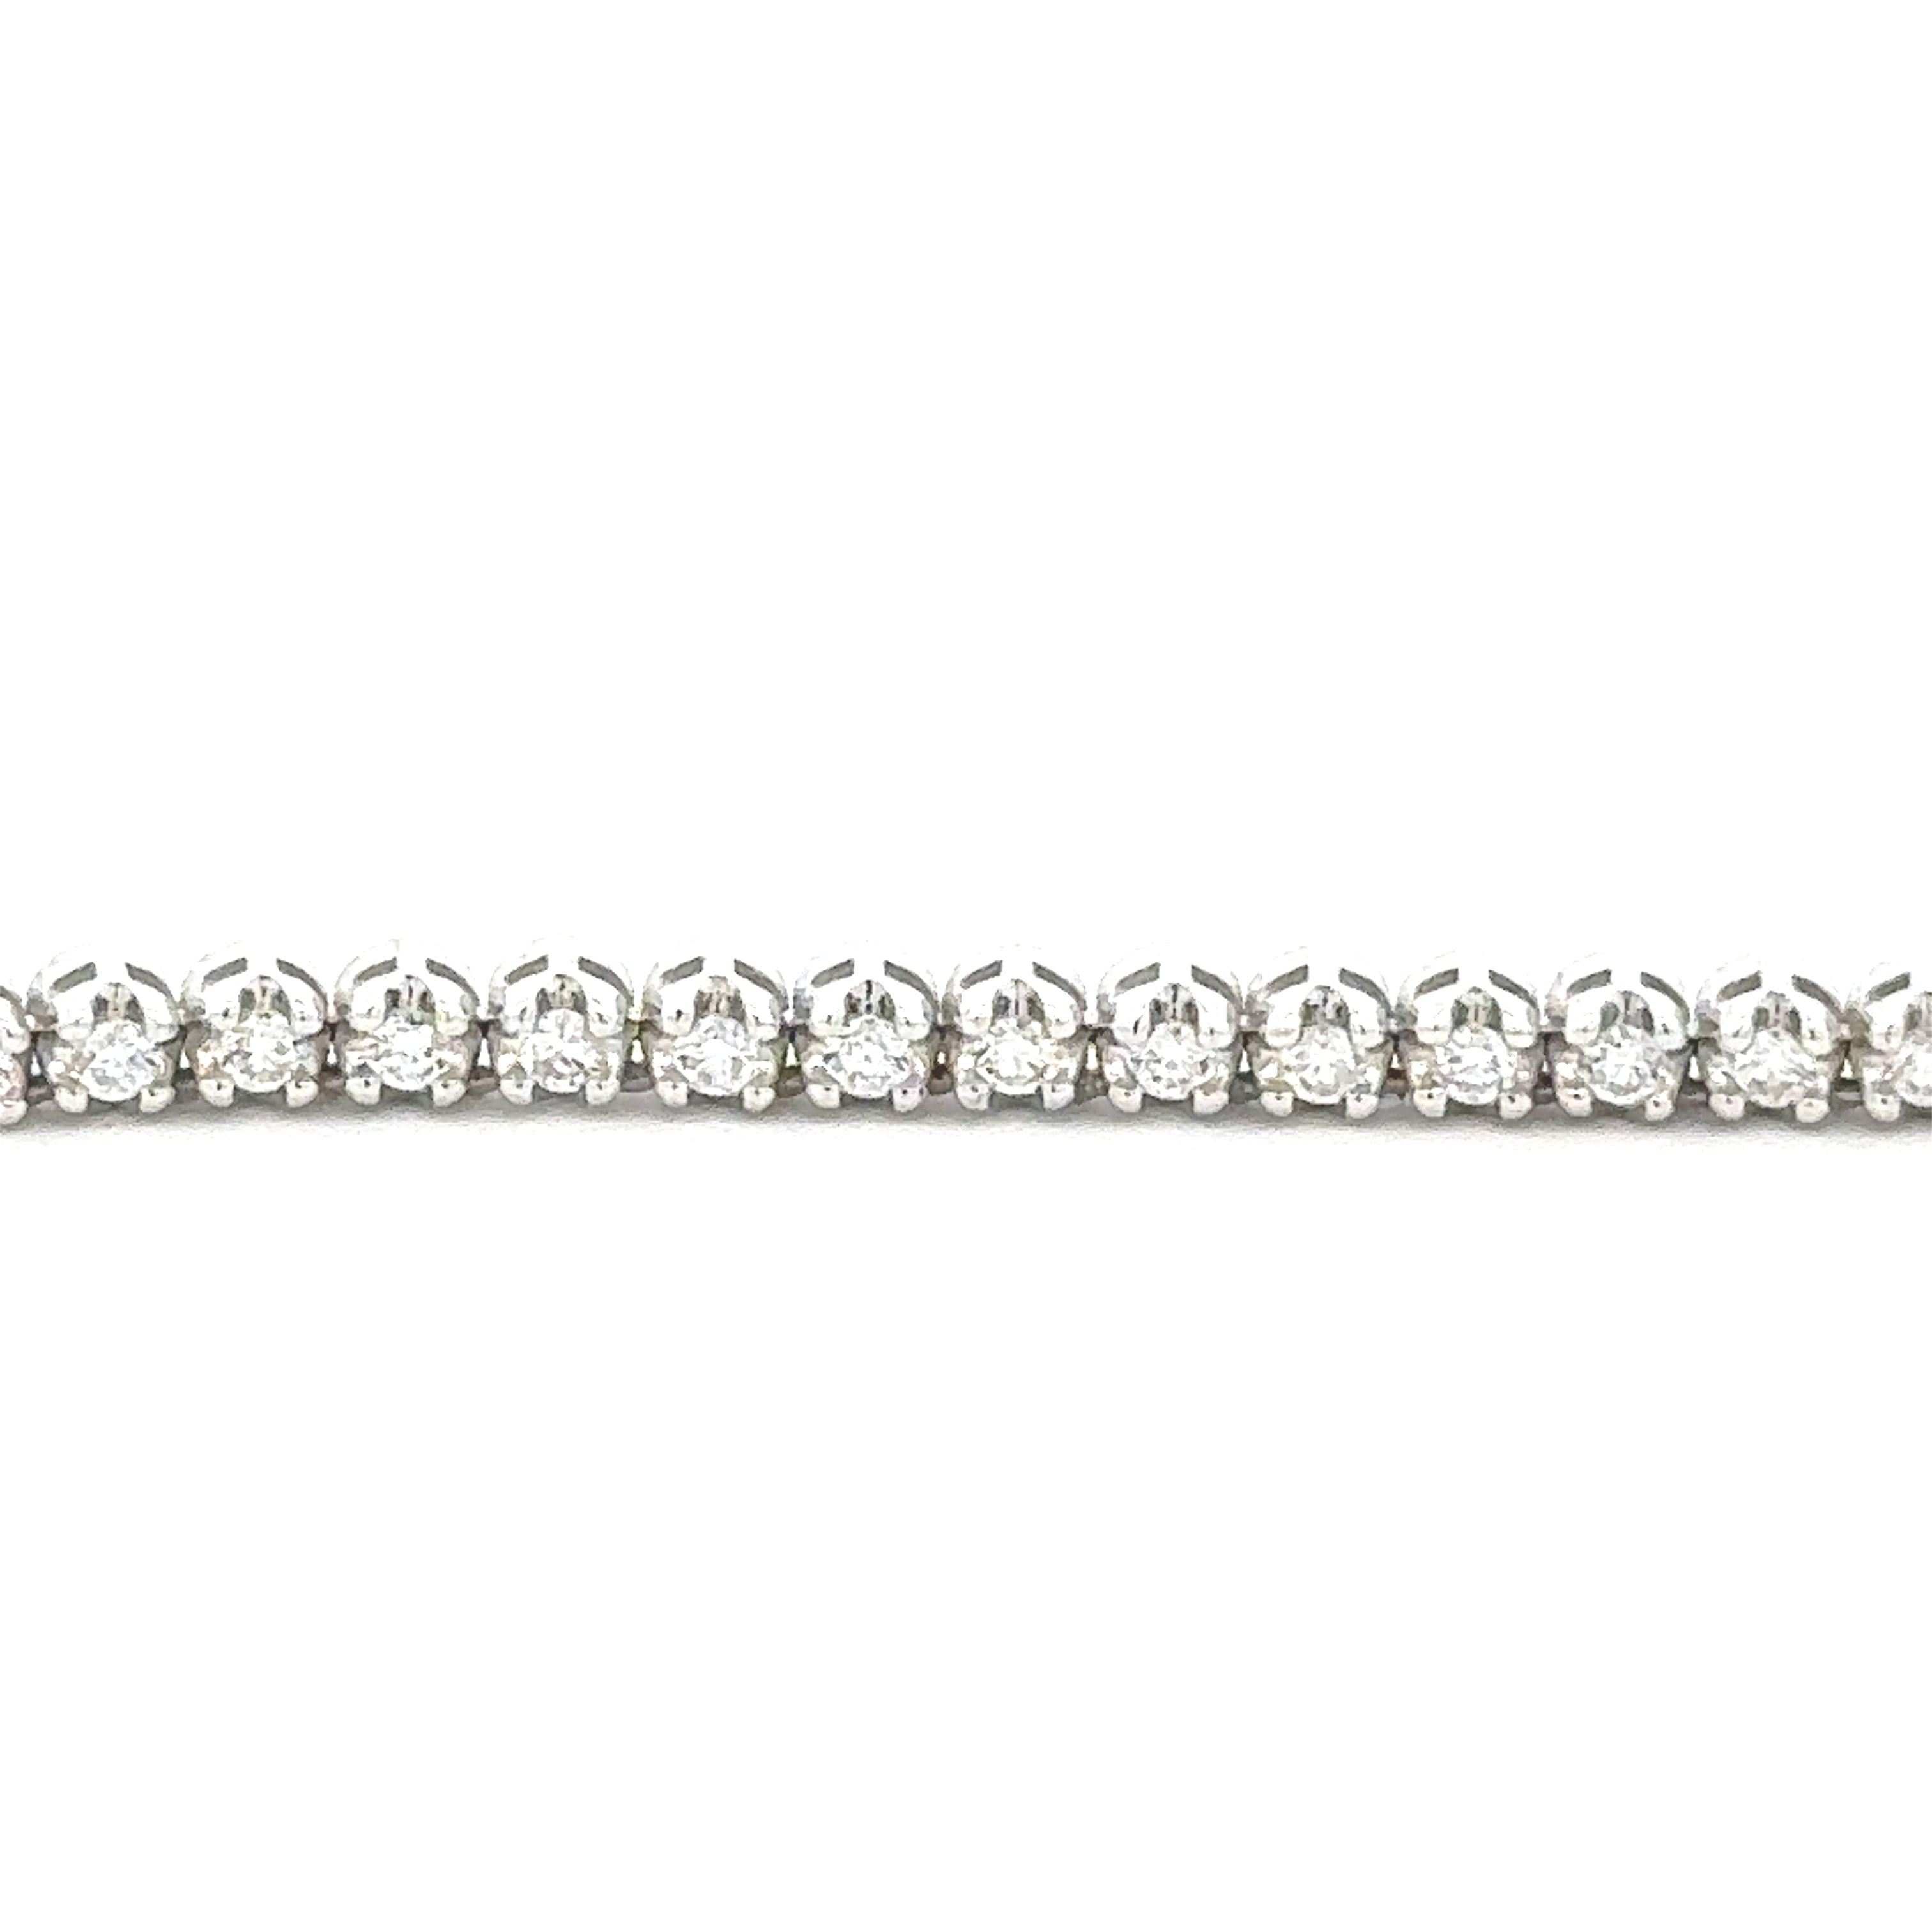 Tennis Necklace 1.4Carat Diamond